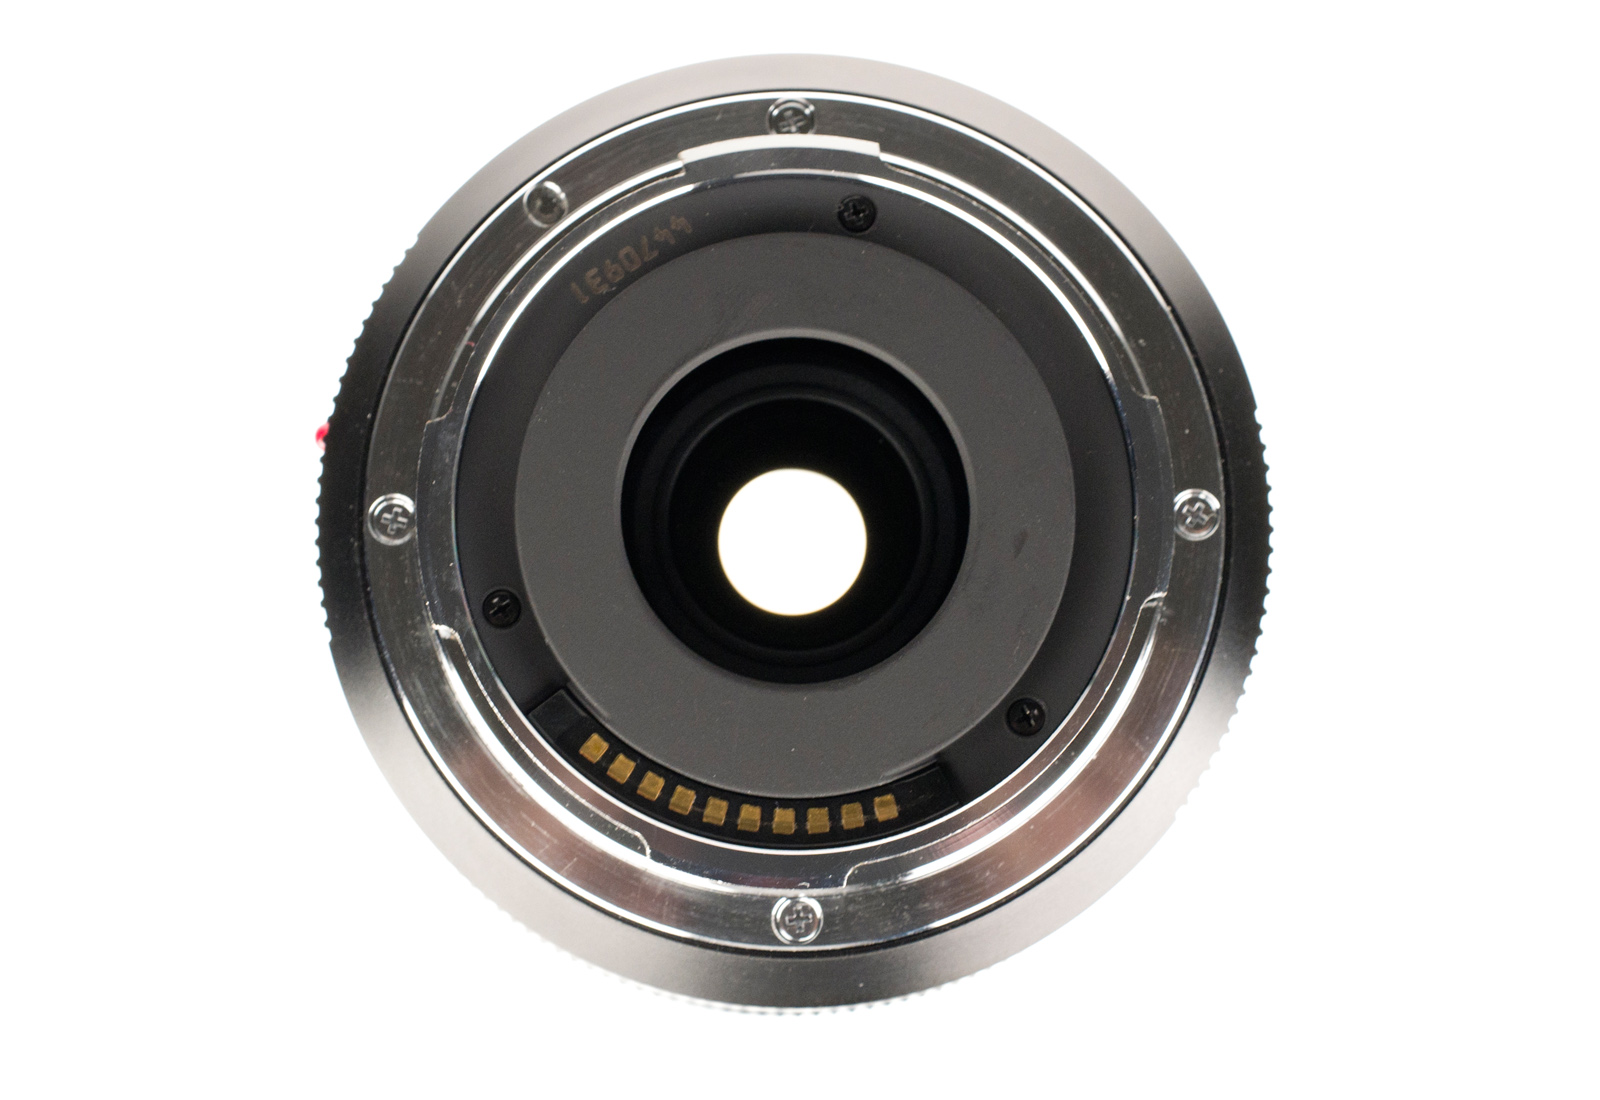 Leica APO-Vario-Elmar-TL 1:3,5-4,5/55-135mm ASPH., schwarz 11083